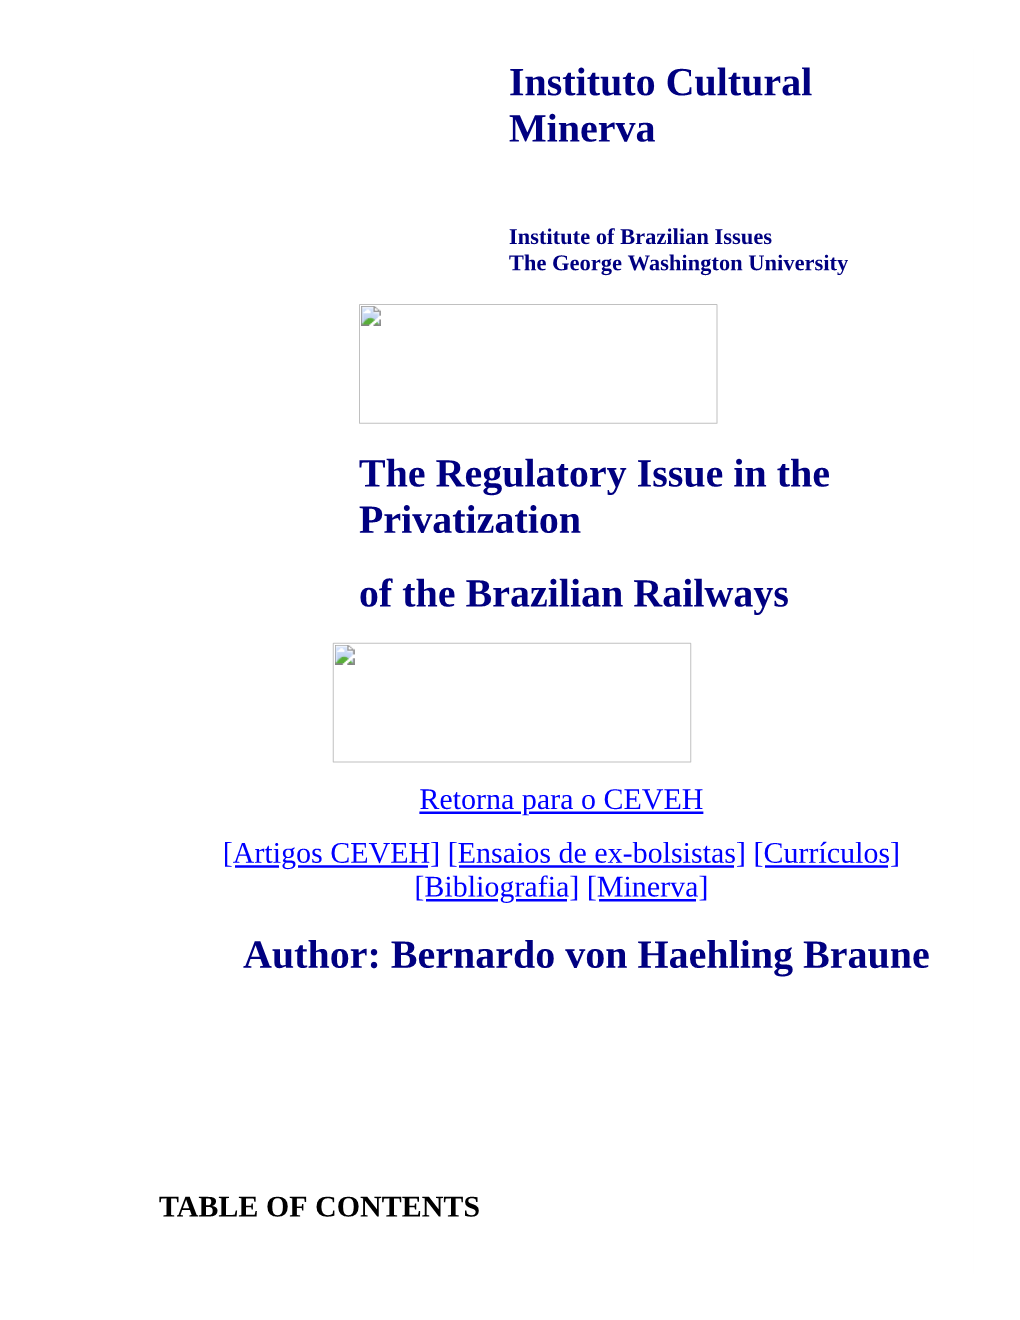 Instituto Cultural Minerva the Regulatory Issue in the Privatization of the Brazilian Railways Author: Bernardo Von Haehling